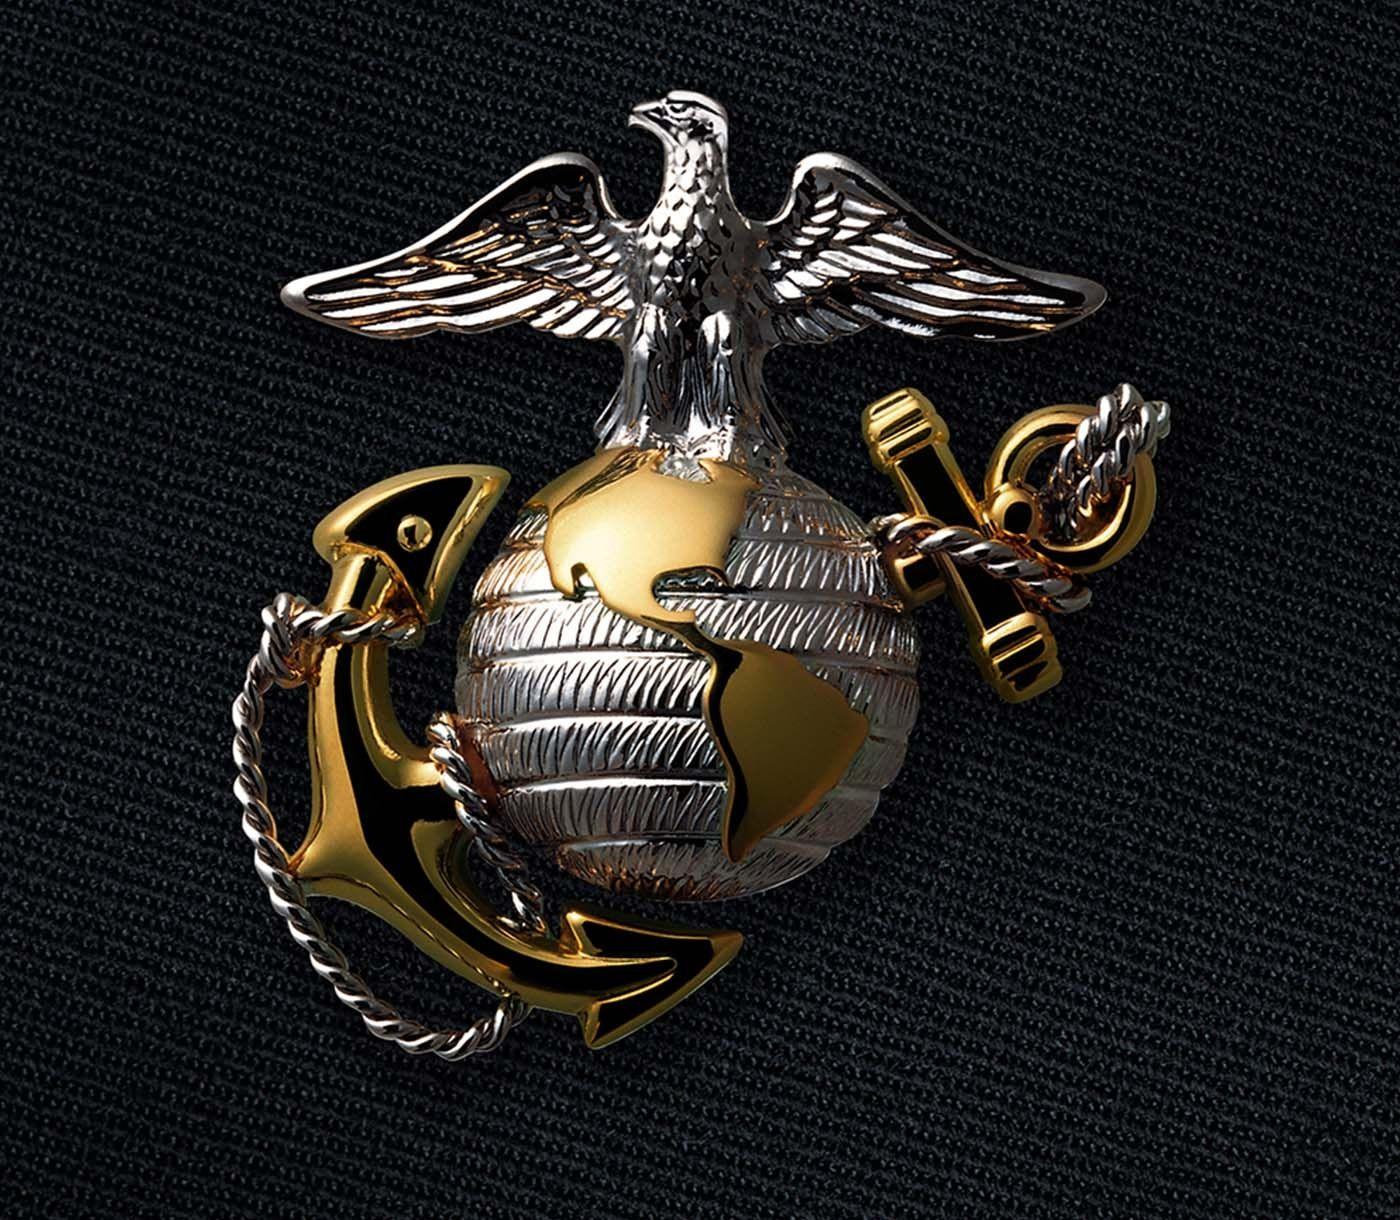 Marines.com Logo - Marine Corps Officers. Training, Jobs, & Benefits